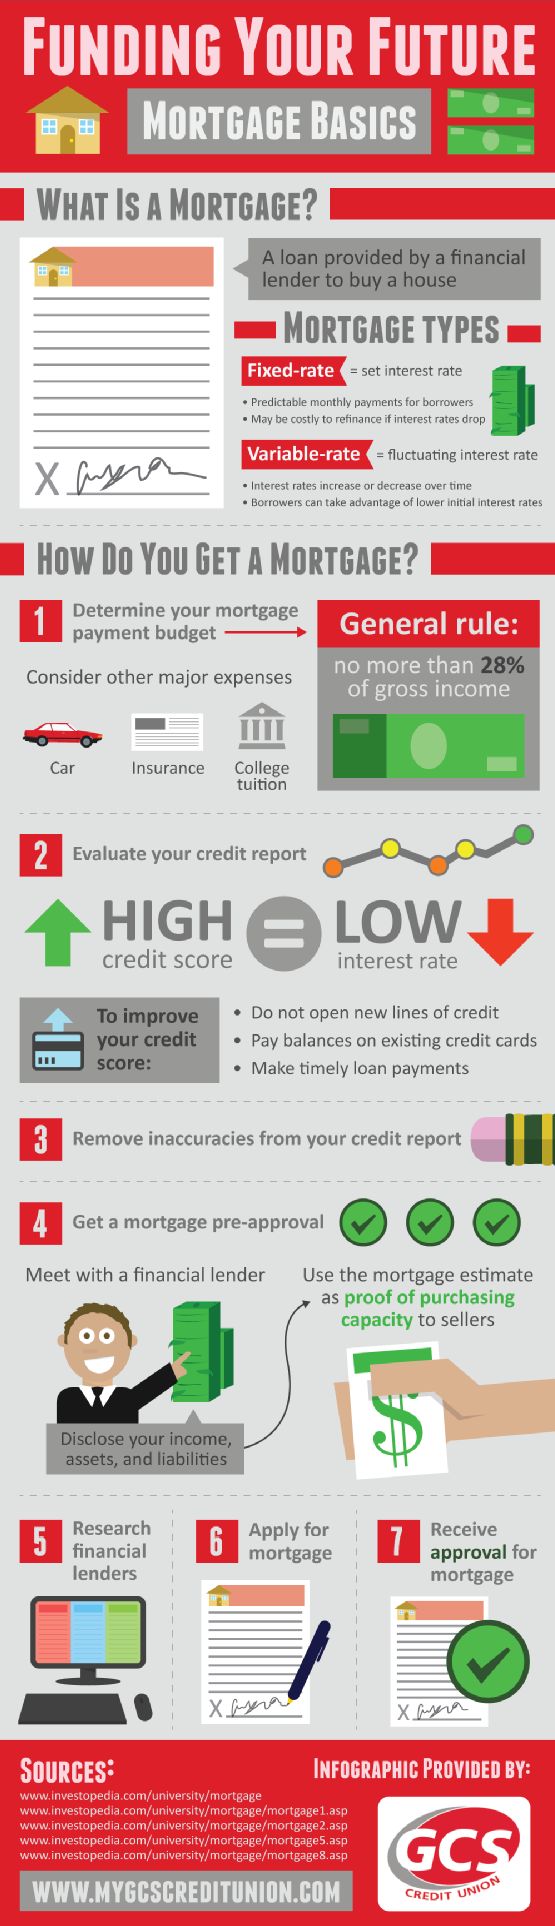 joint mortgage application bad credit